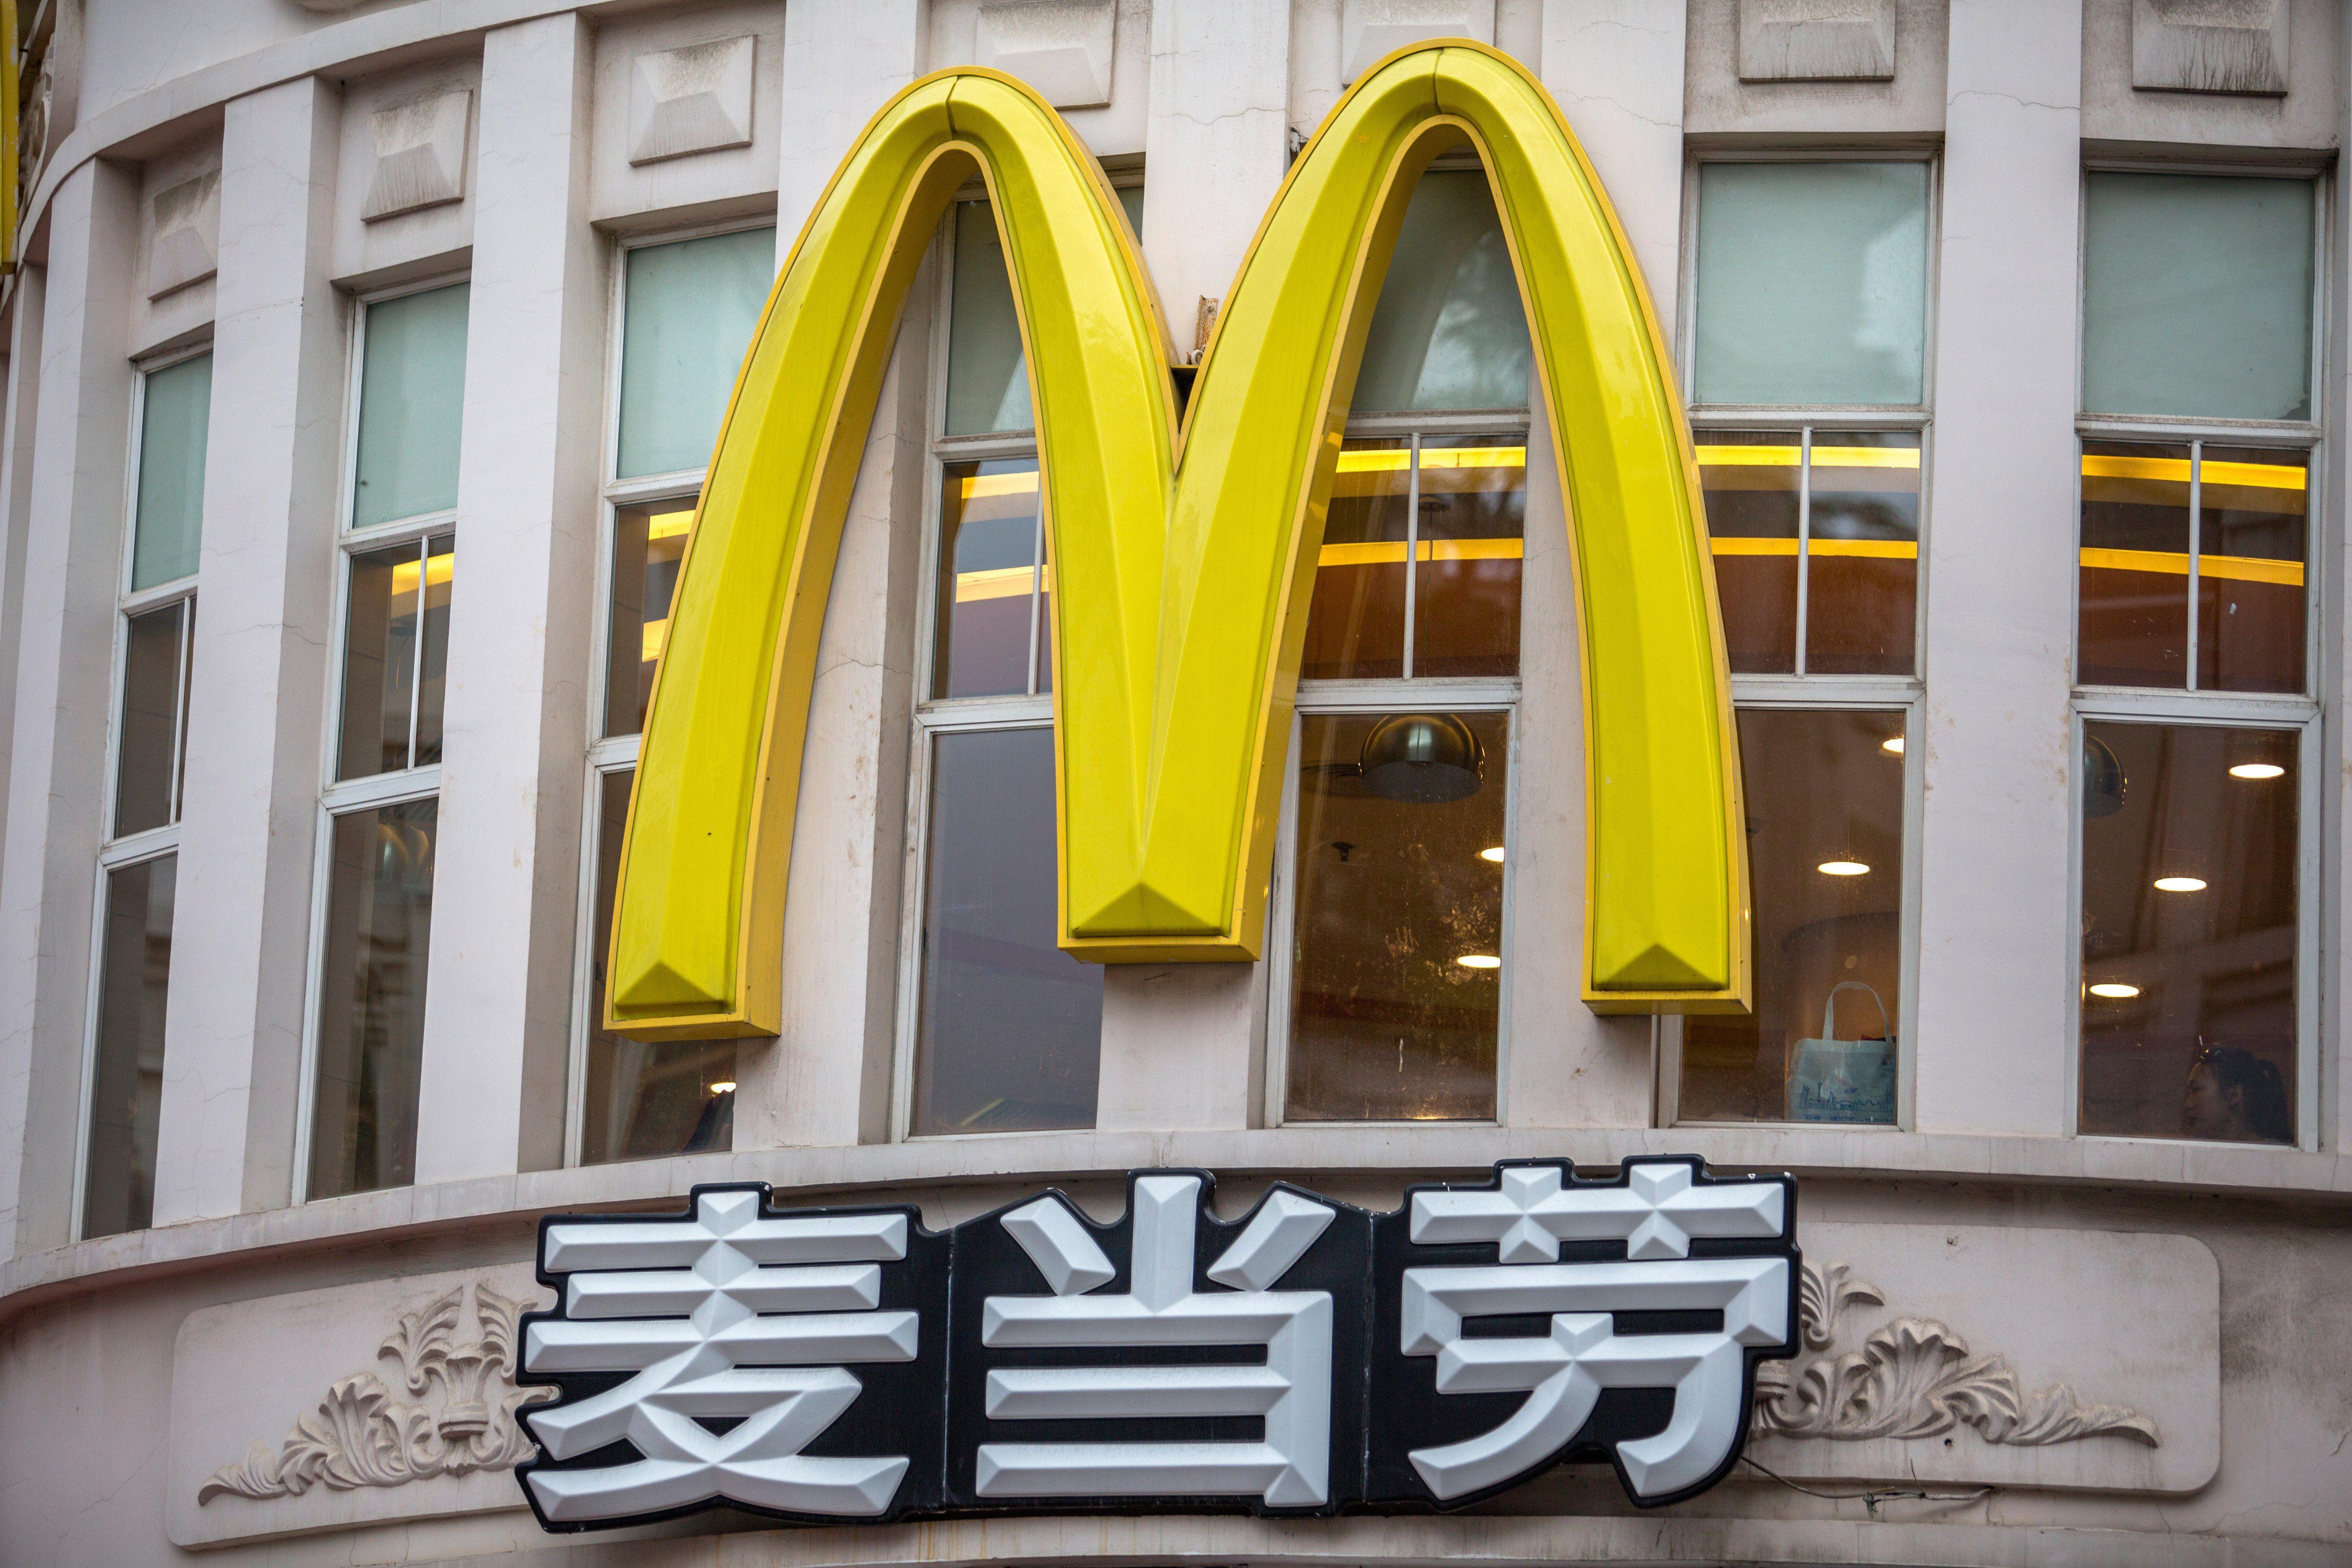 Chinese McDonald's Logo - McDonald's Has a New Gray Hamburger | Time